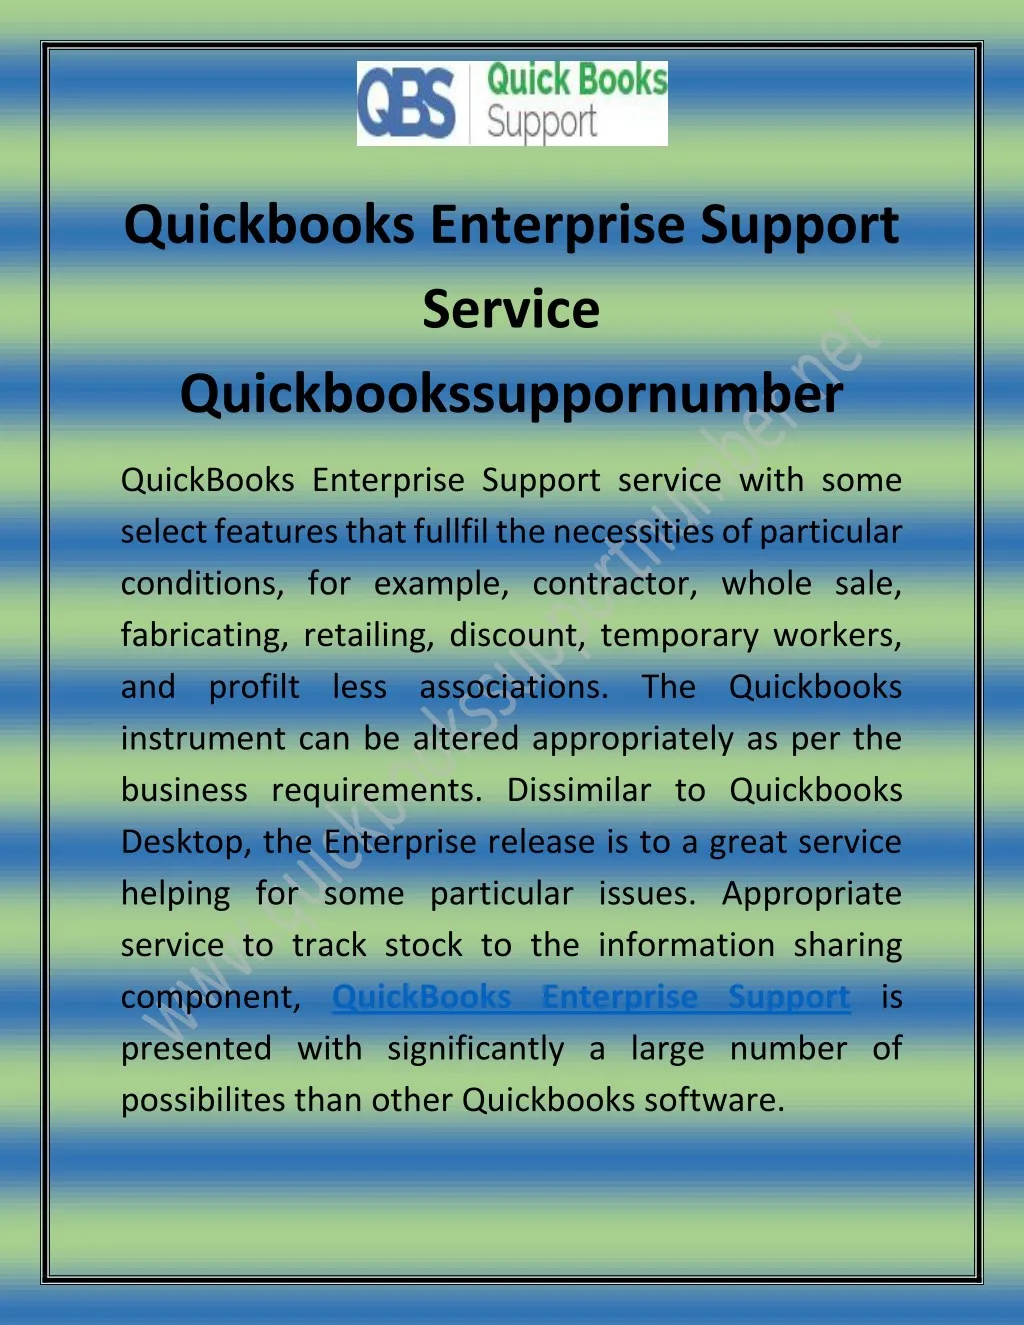 quickbooks enterprise support service